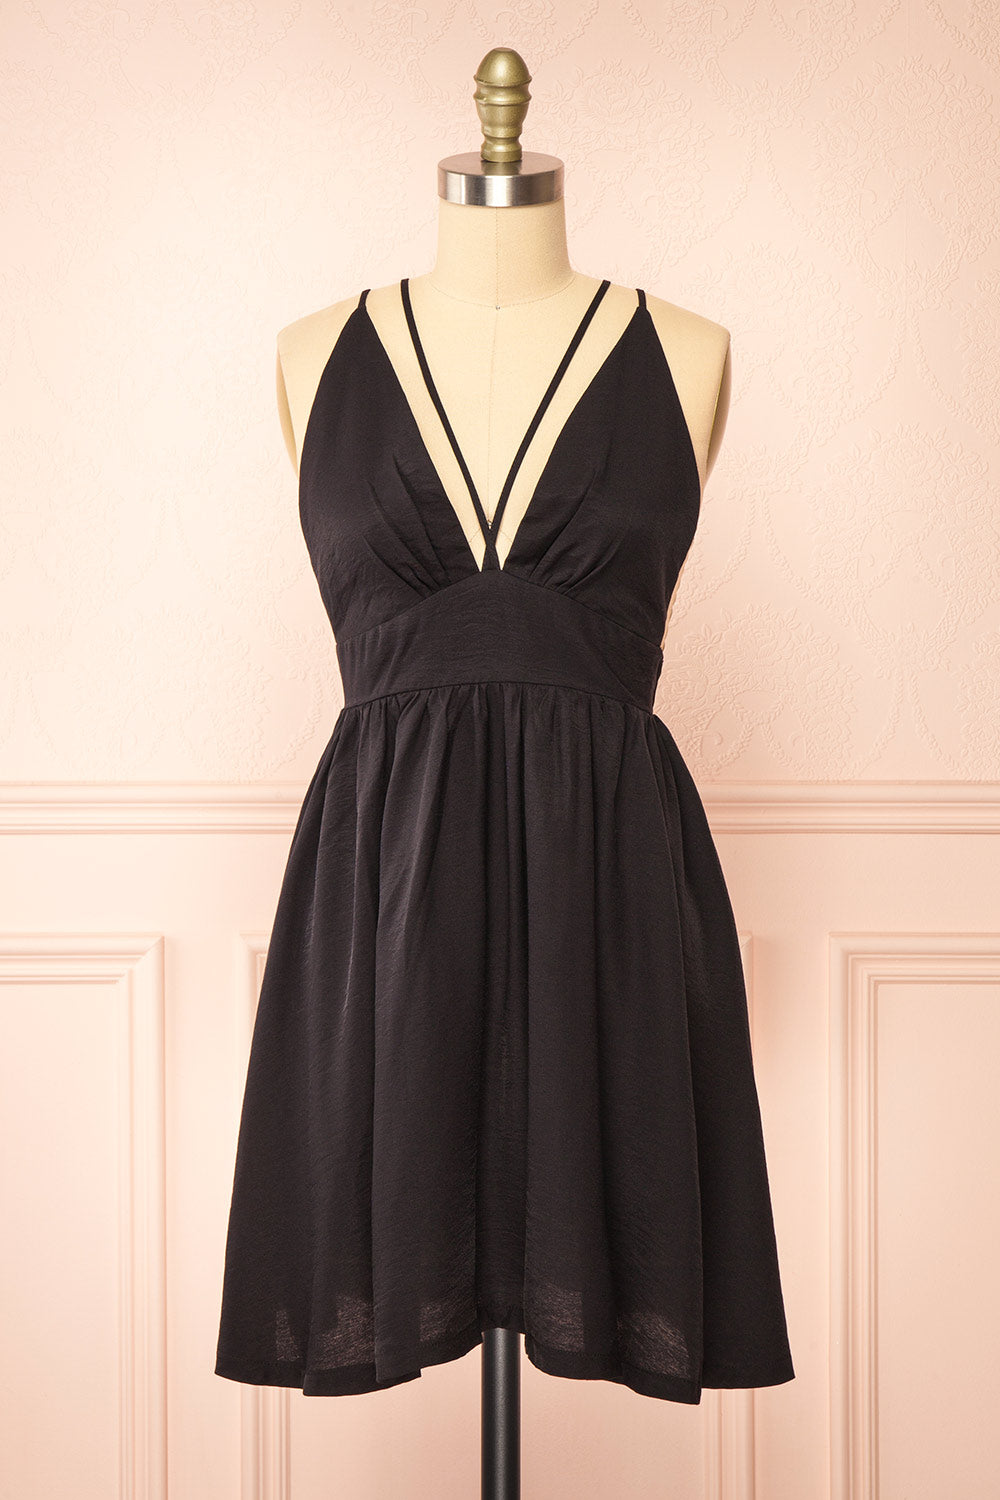 Tillie Short Black Plunging Neckline Dress | Boutique 1861 front view